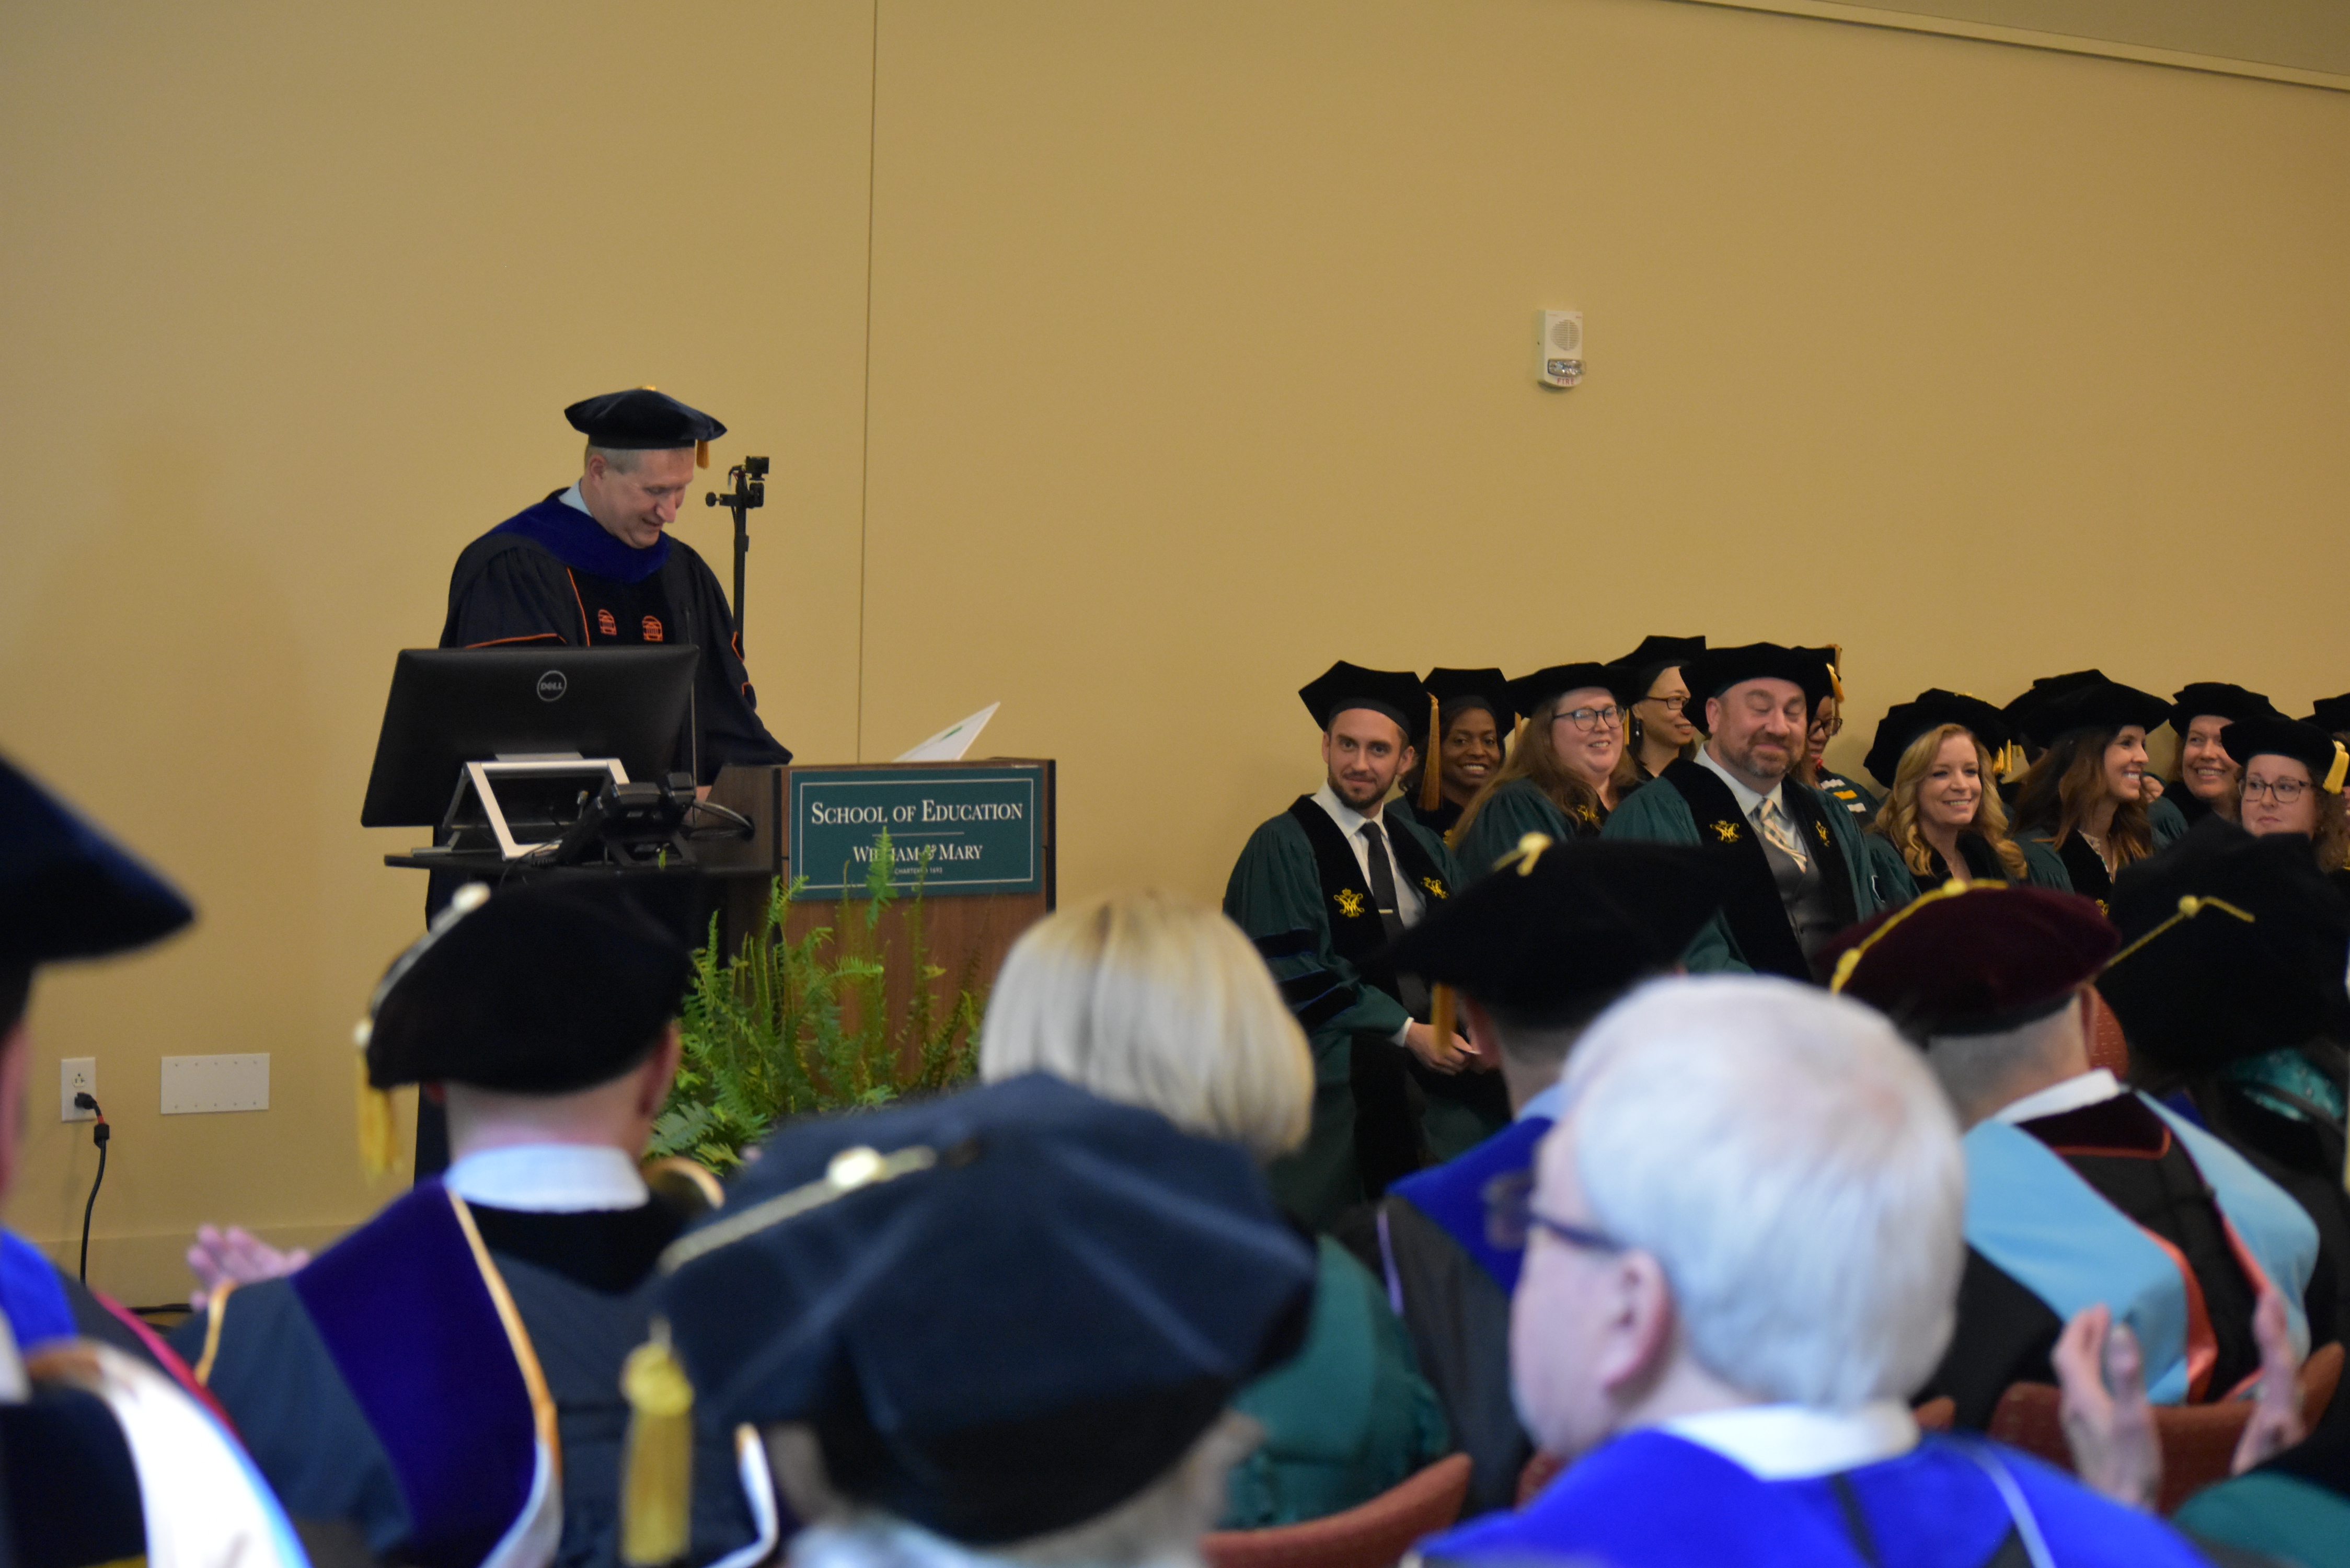 Dean Knoeppel Addresses Graduates